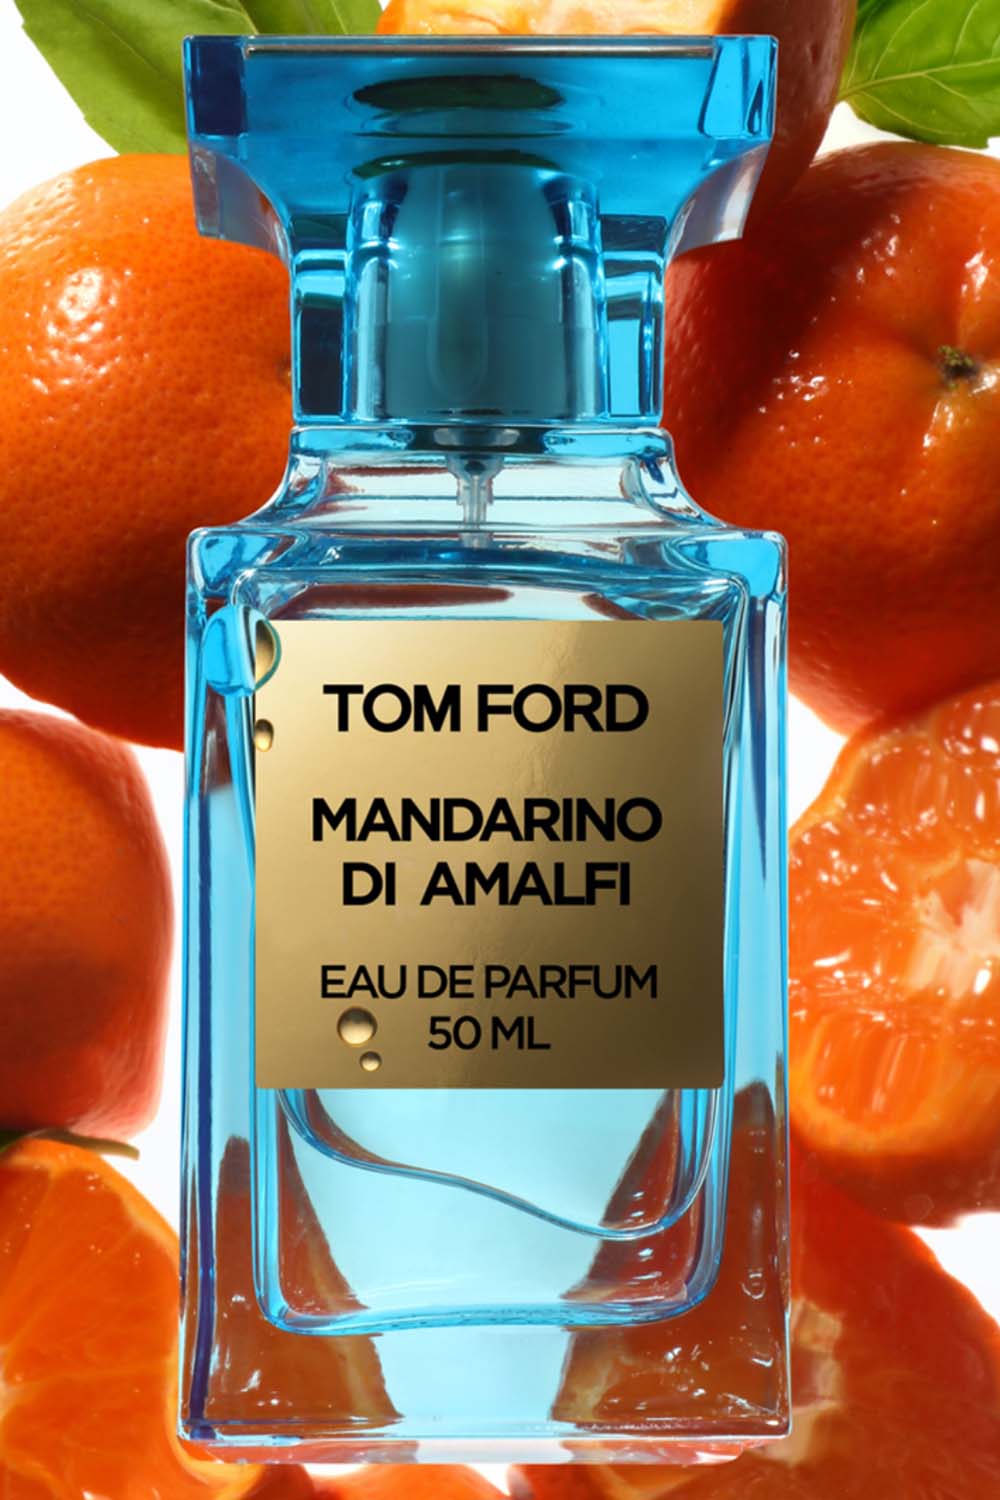 Mandarino Di Amalfi Eau De Parfum 50ML TOM FORD